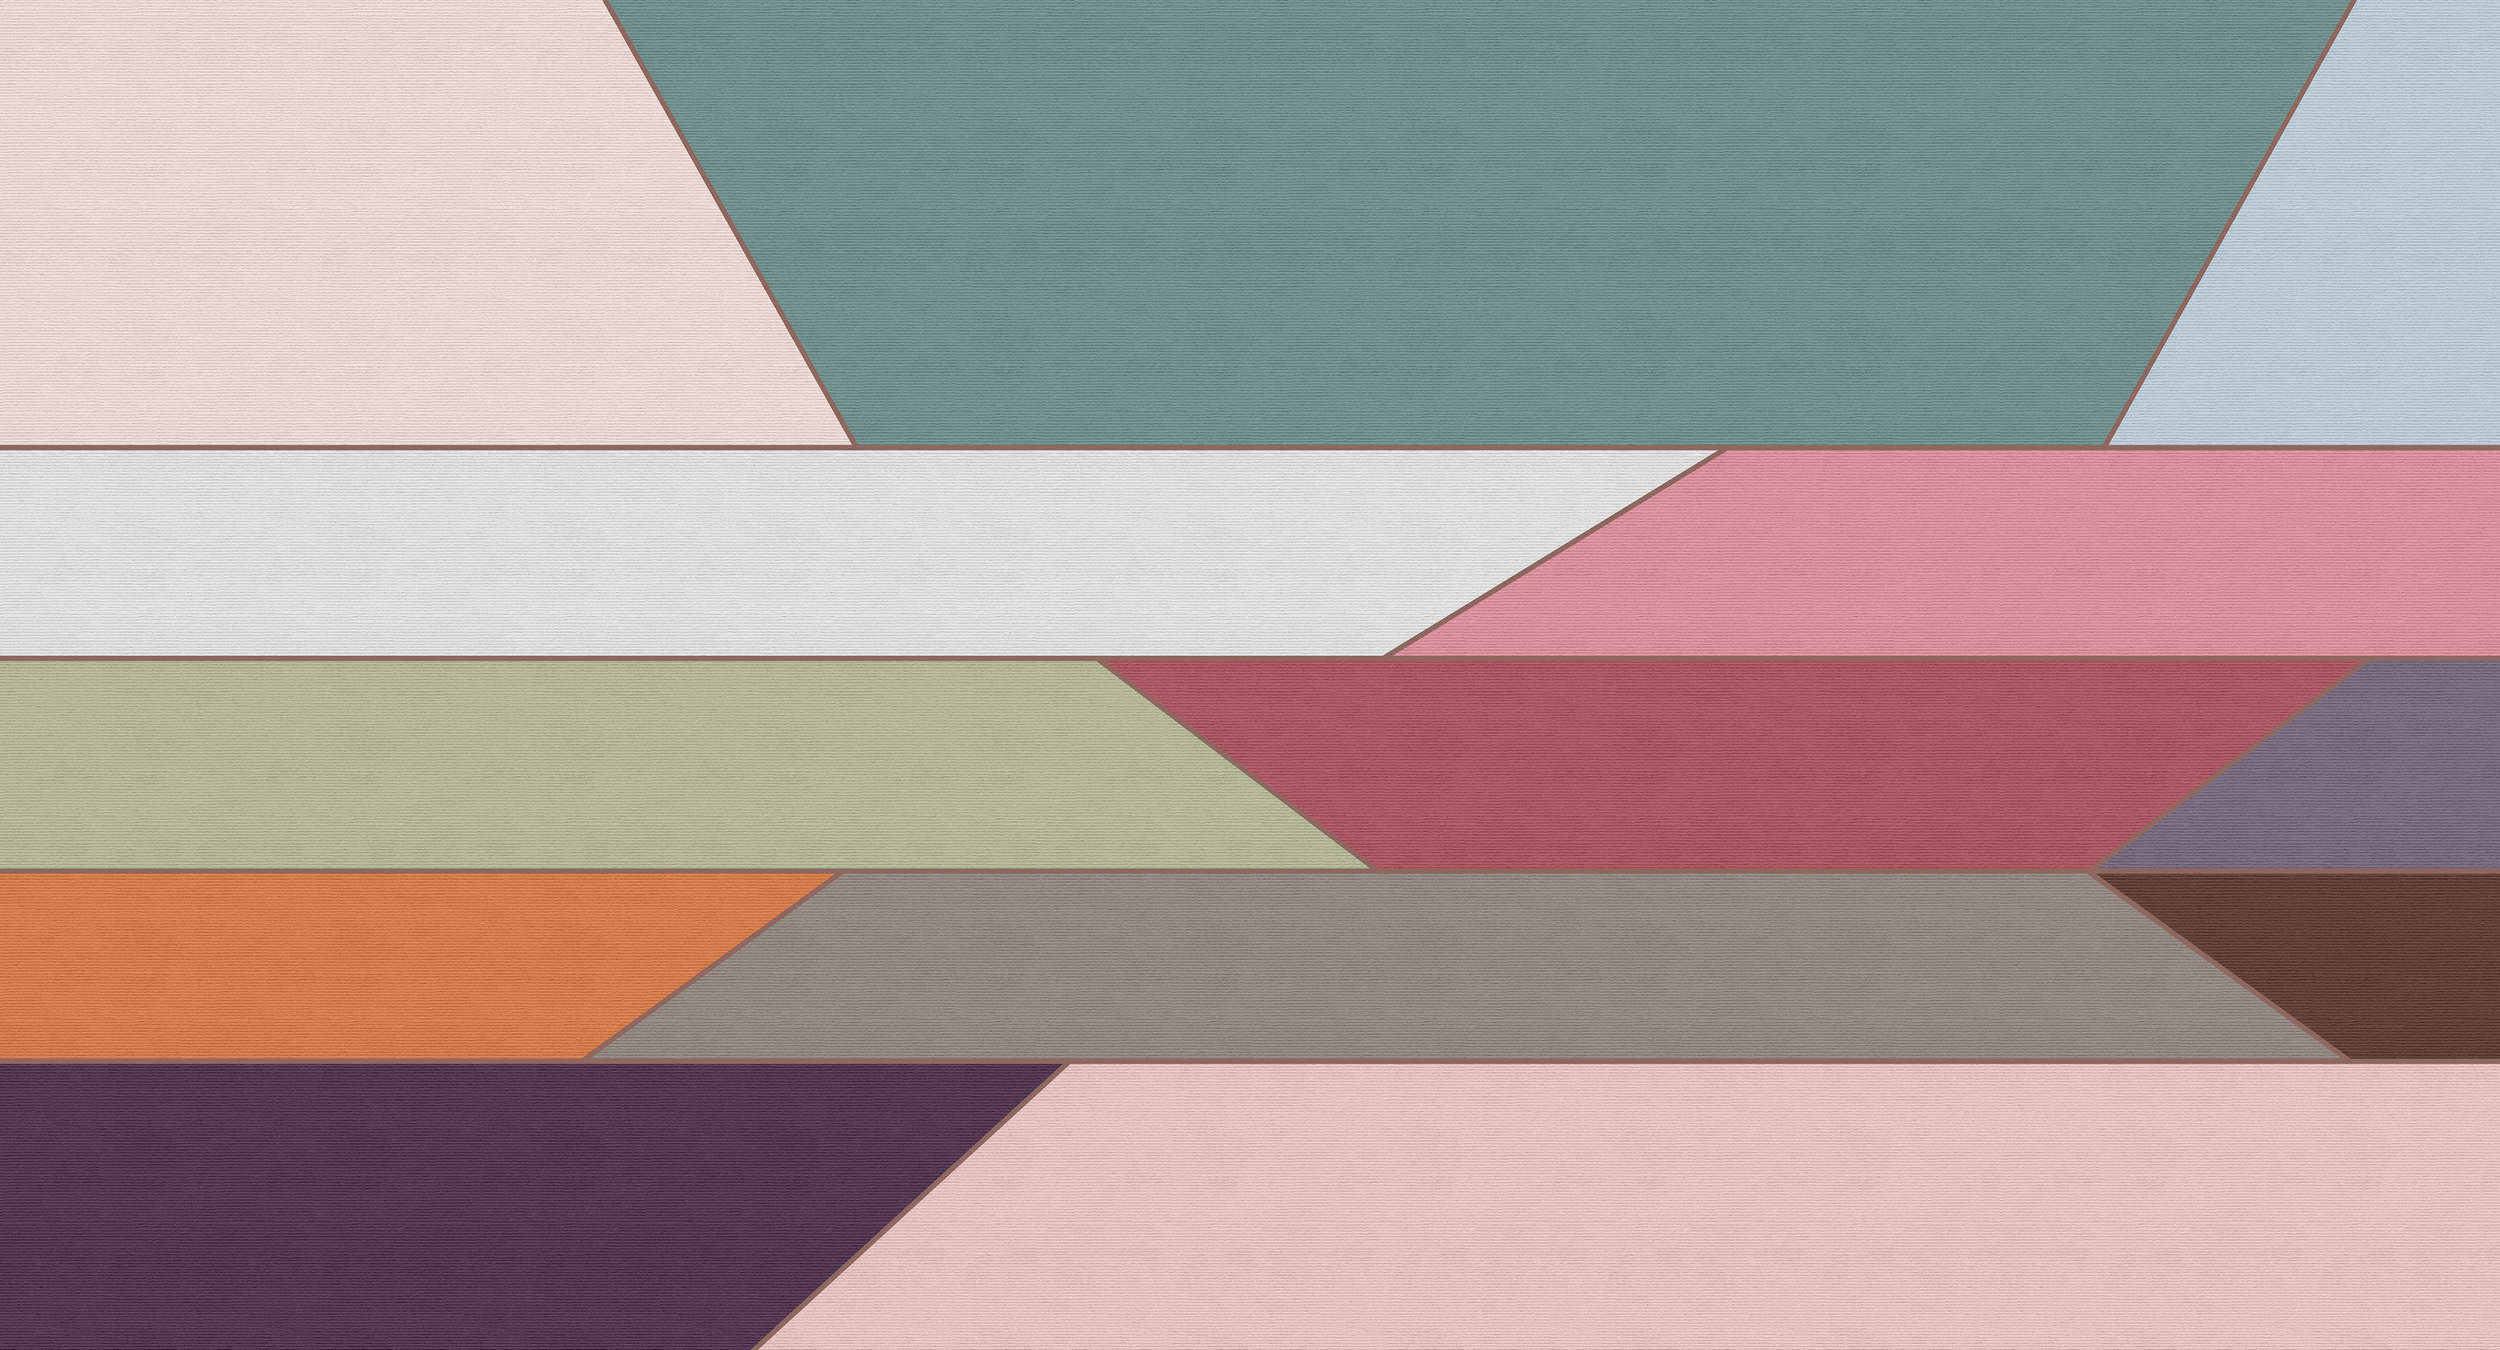             Geometry 2 - Fotomurali a righe orizzontali colorate con struttura a coste - Beige, Blu | Pile liscio opaco
        